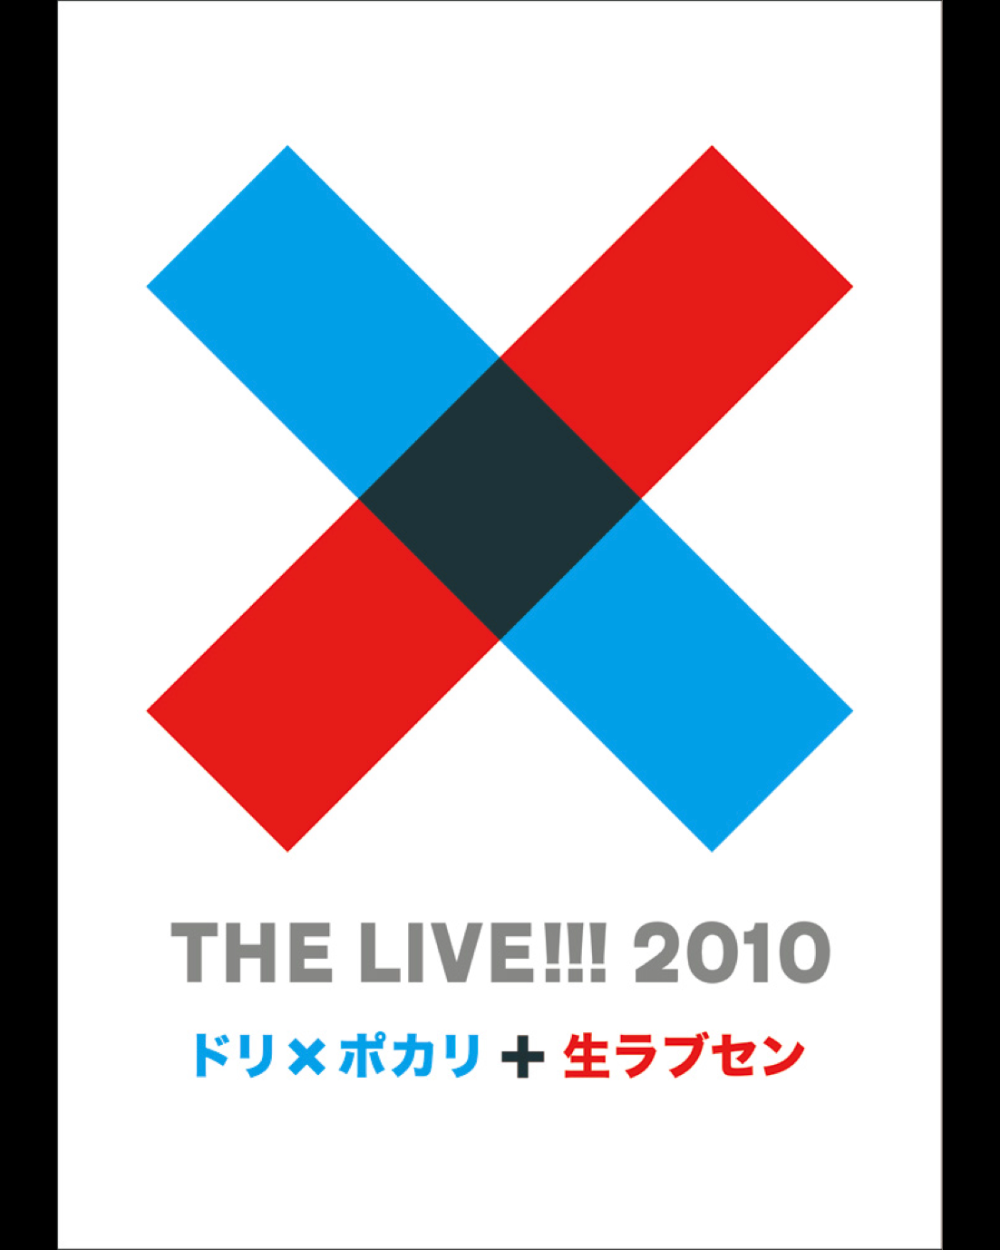 DREAMS COME TRUE【DVD】THE LIVE!!! 2010 ドリ×ポカリ+生ラブセン